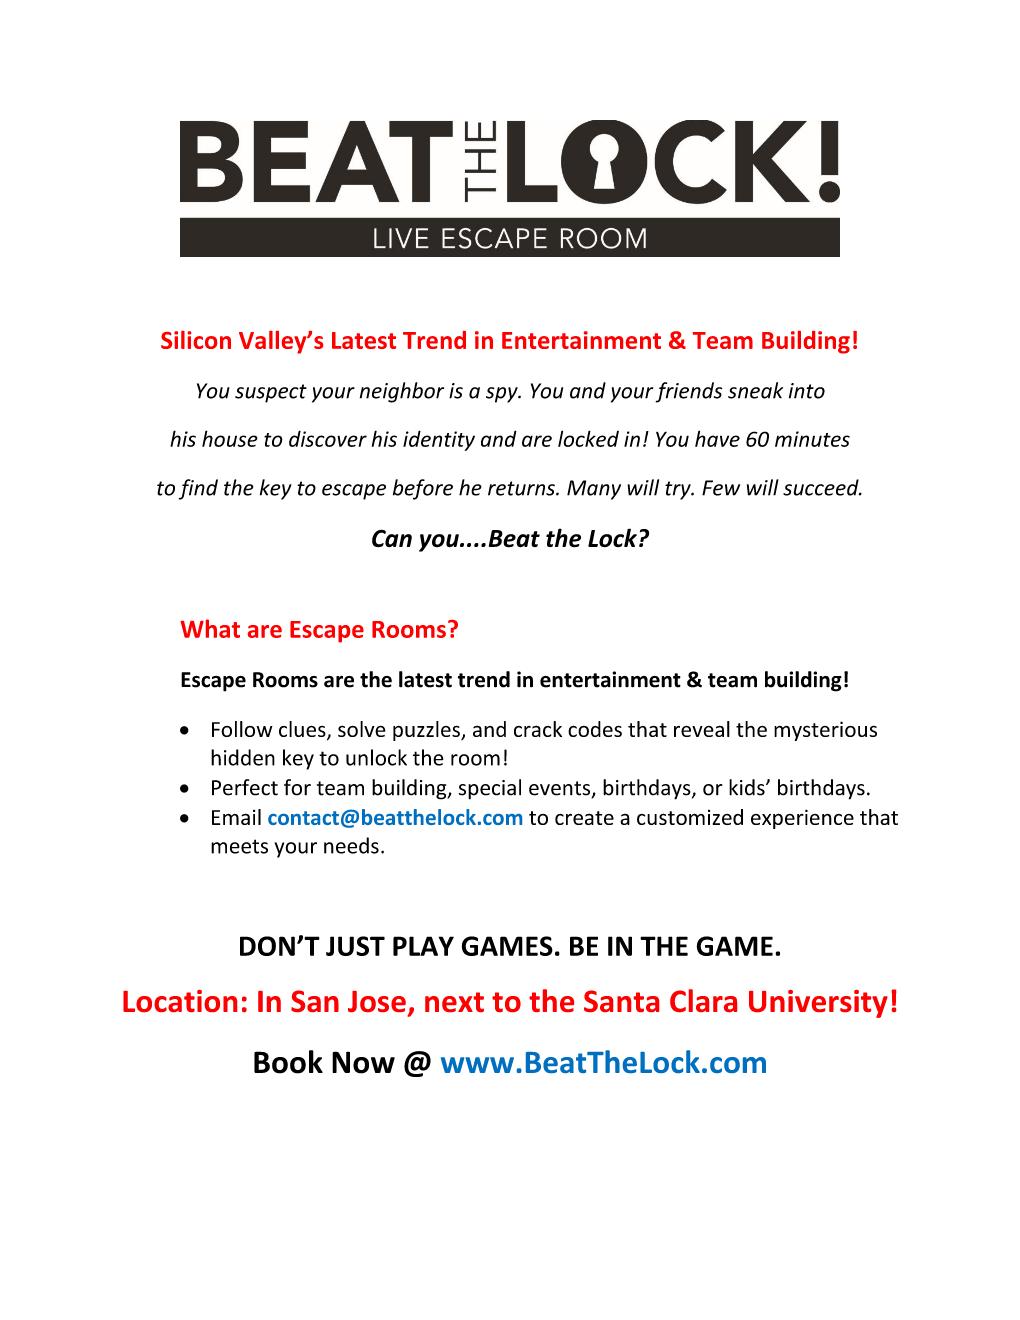 Beat the Lock Escape Room -  4 tickets to use toward 1 private escape room.